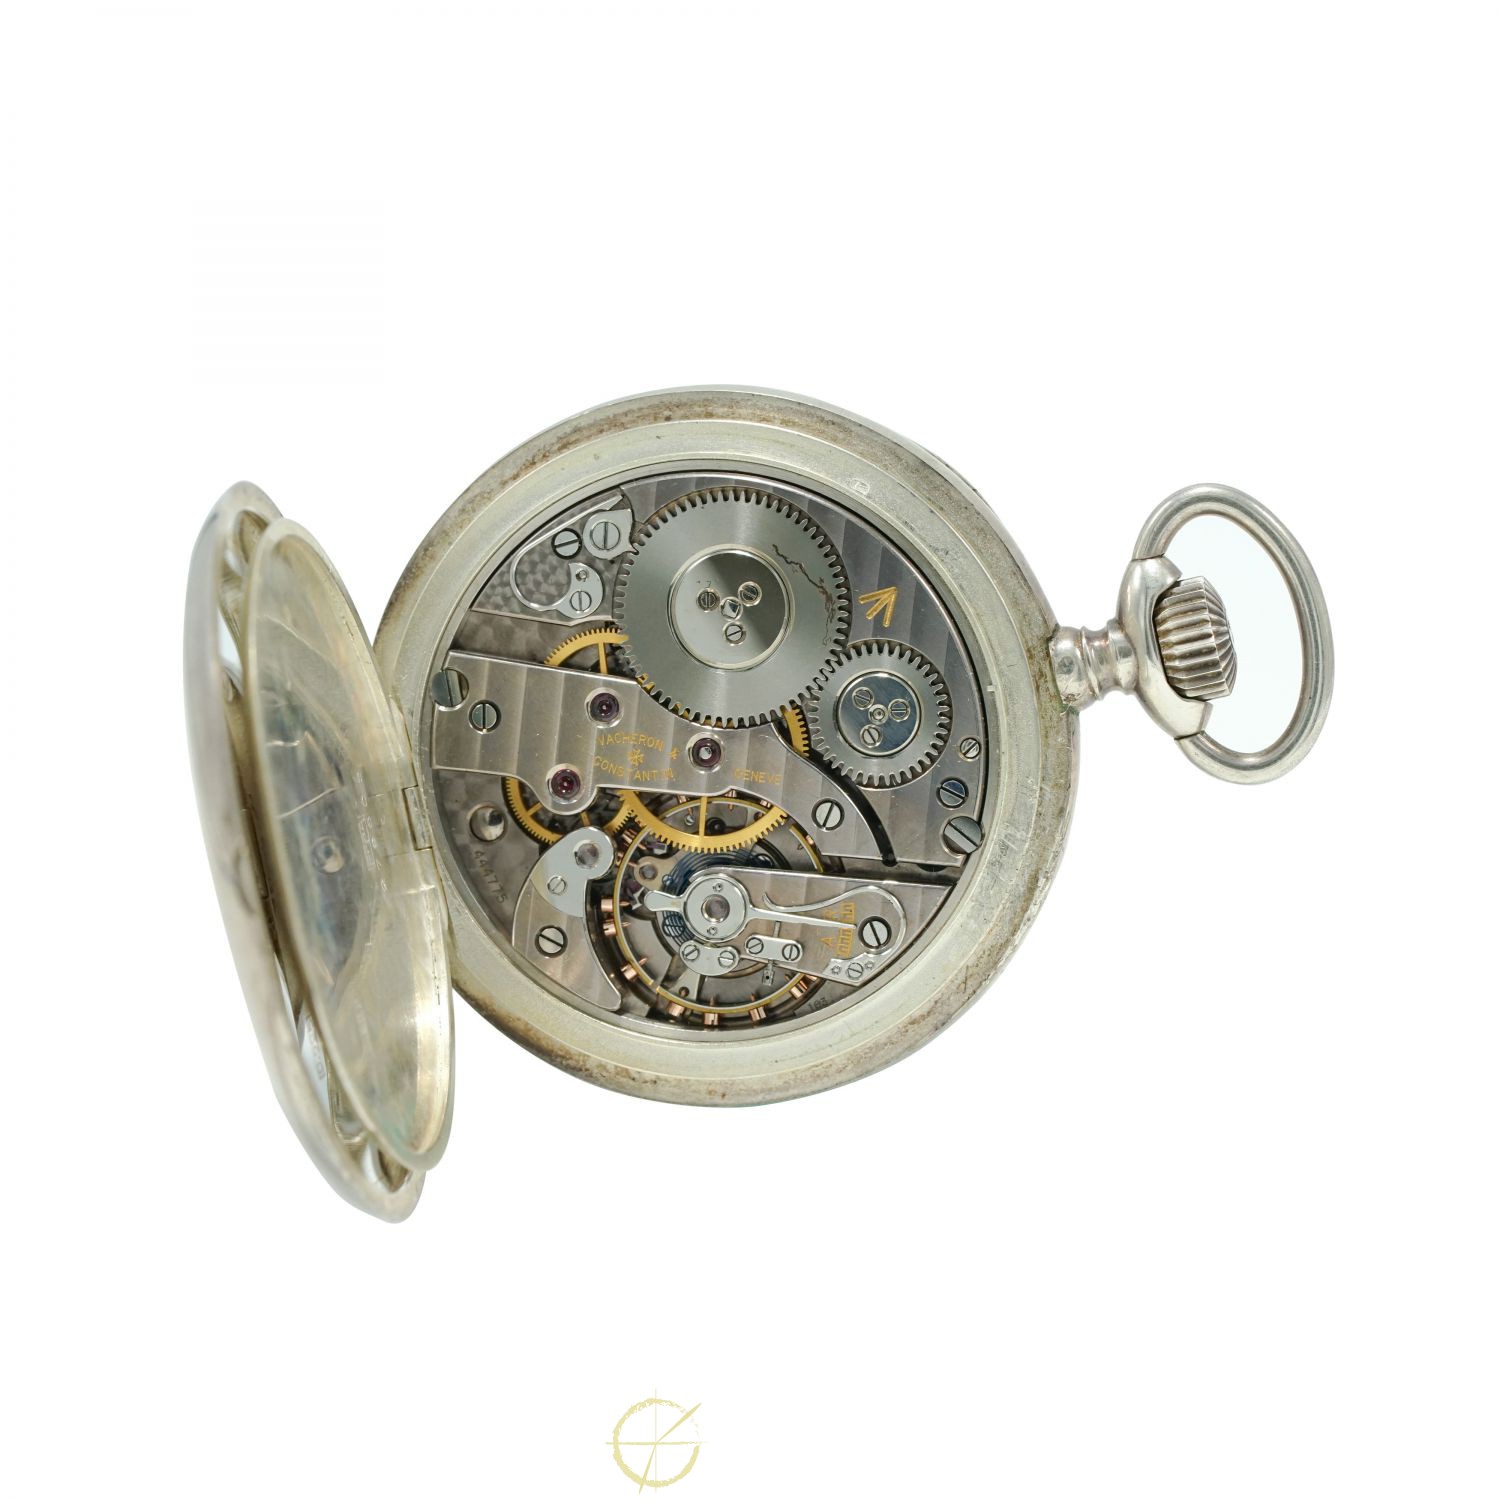 Vacheron Constantin Deck Chronometer - MacauTimepiece Museum